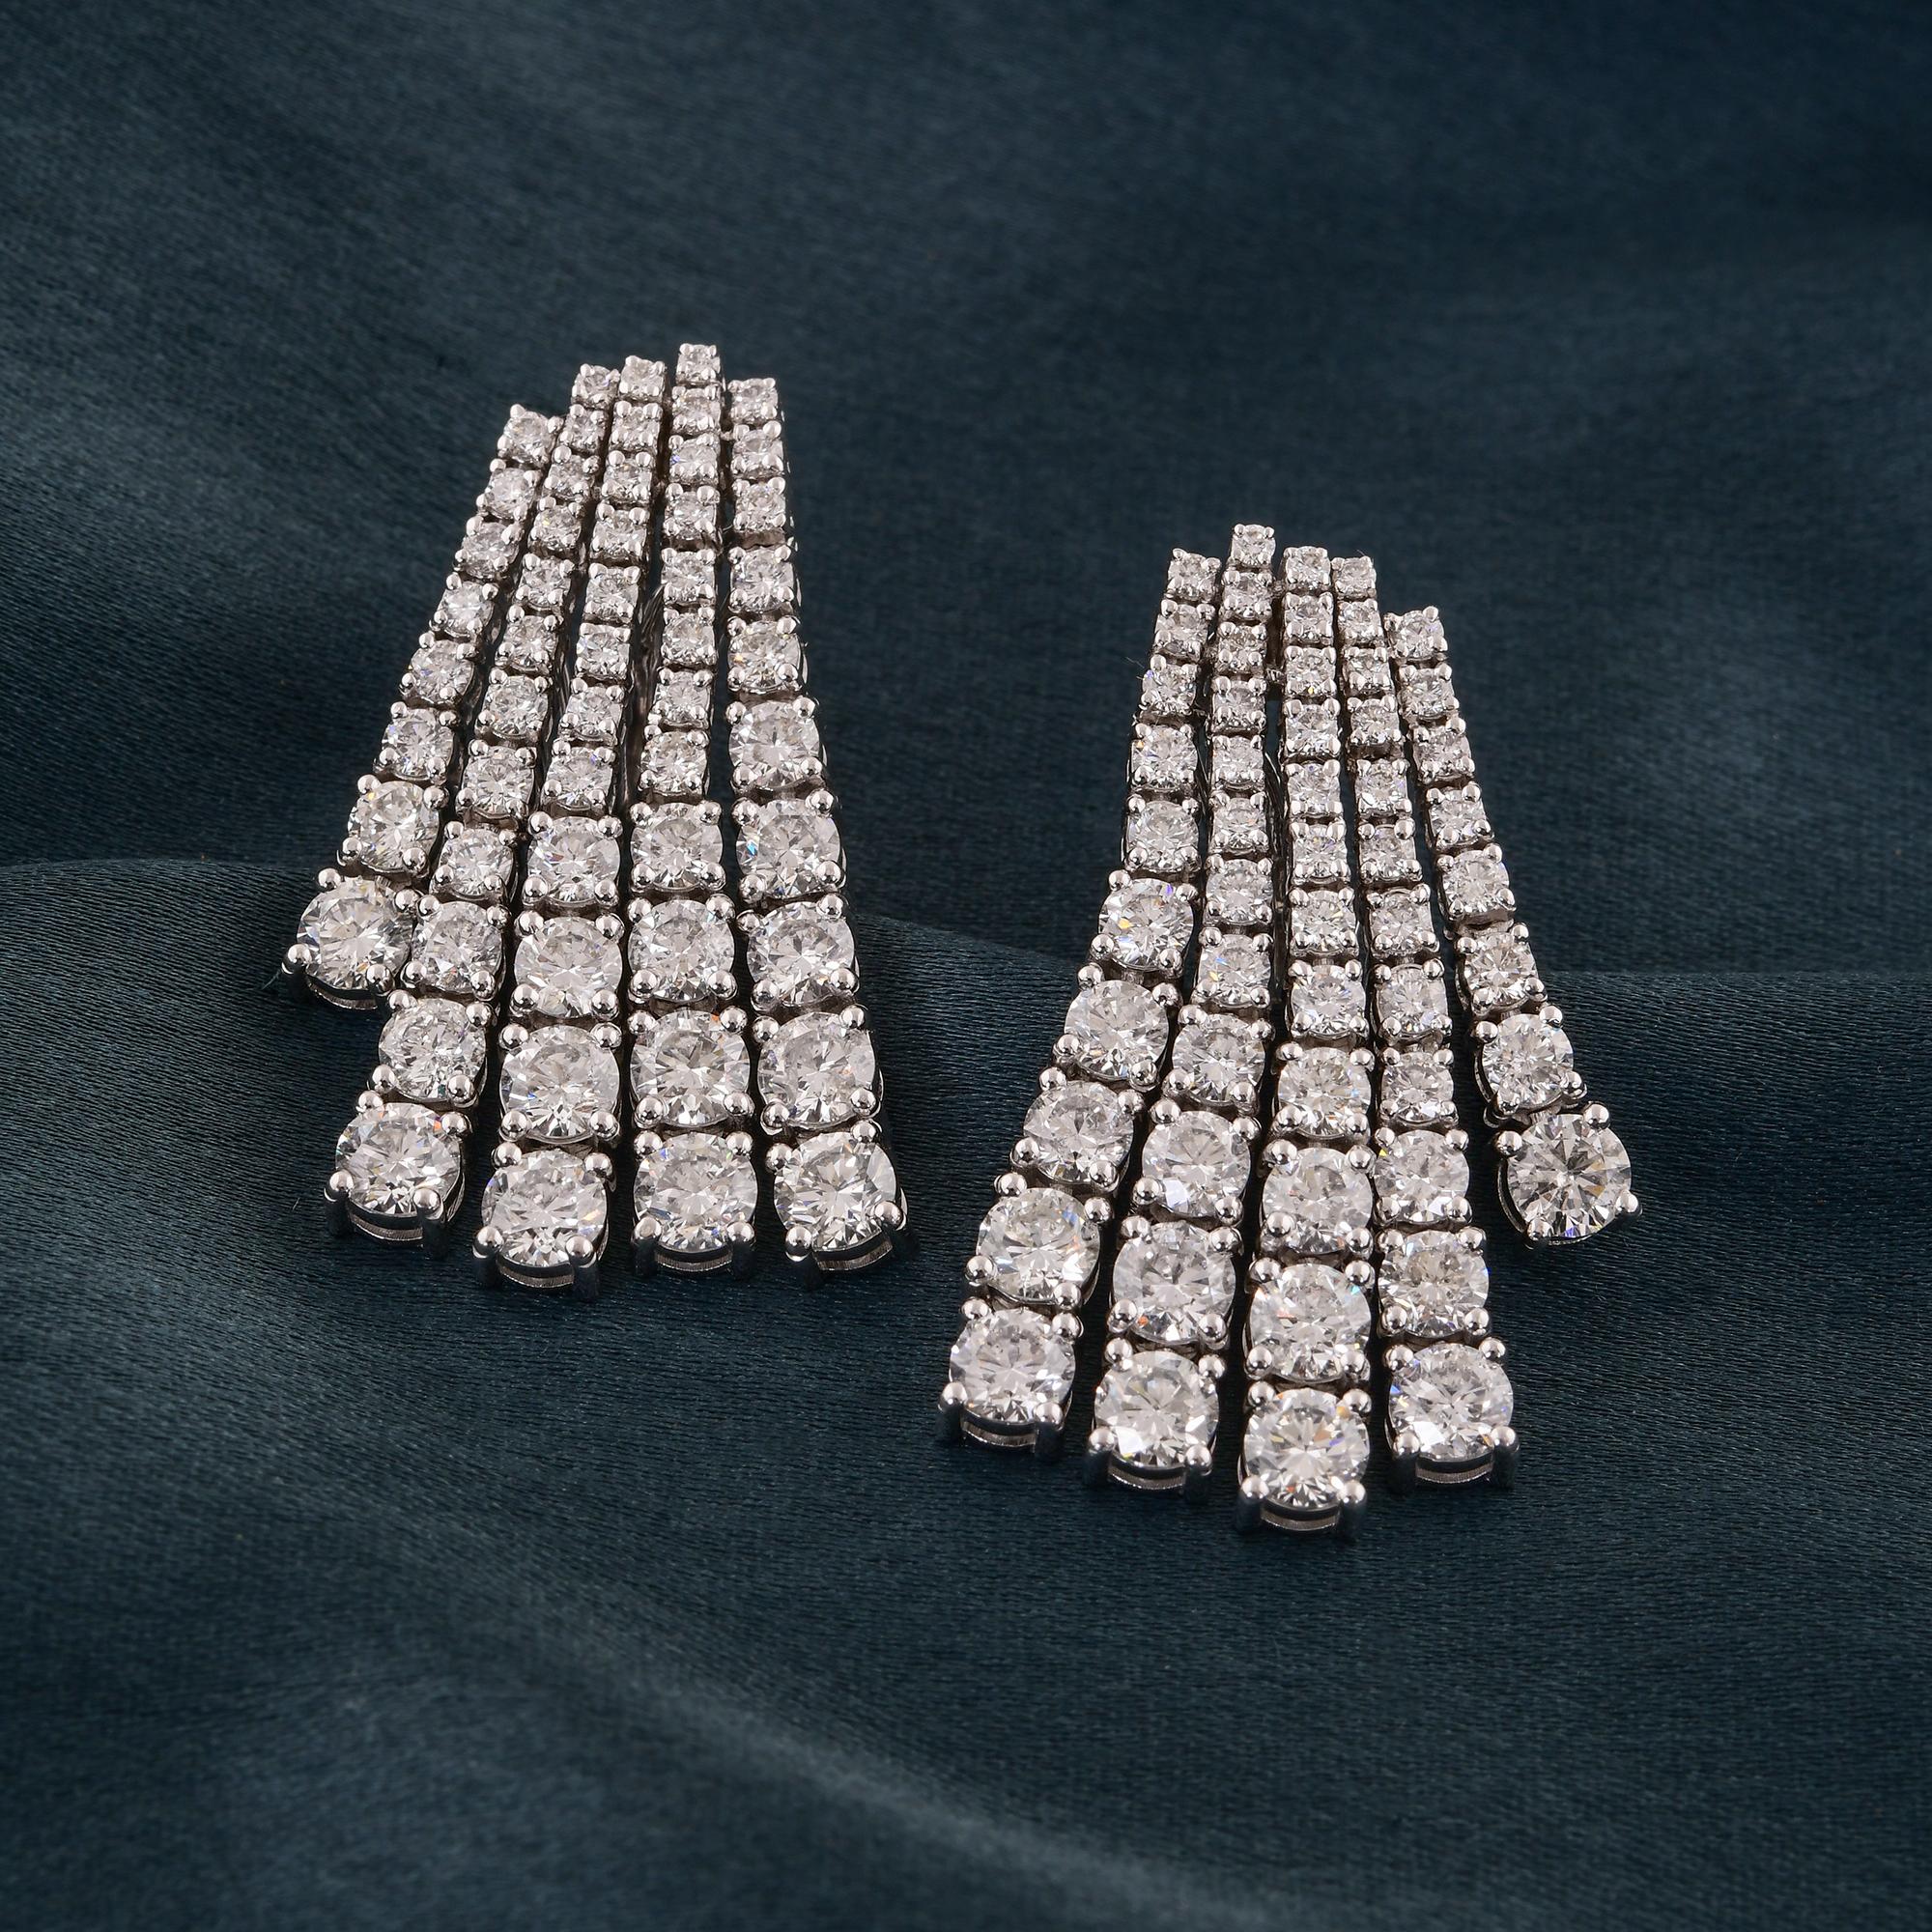 Round Cut Real 8.8 Carat Multi Layer Diamond Earrings 18 Karat White Gold Handmade Jewelry For Sale